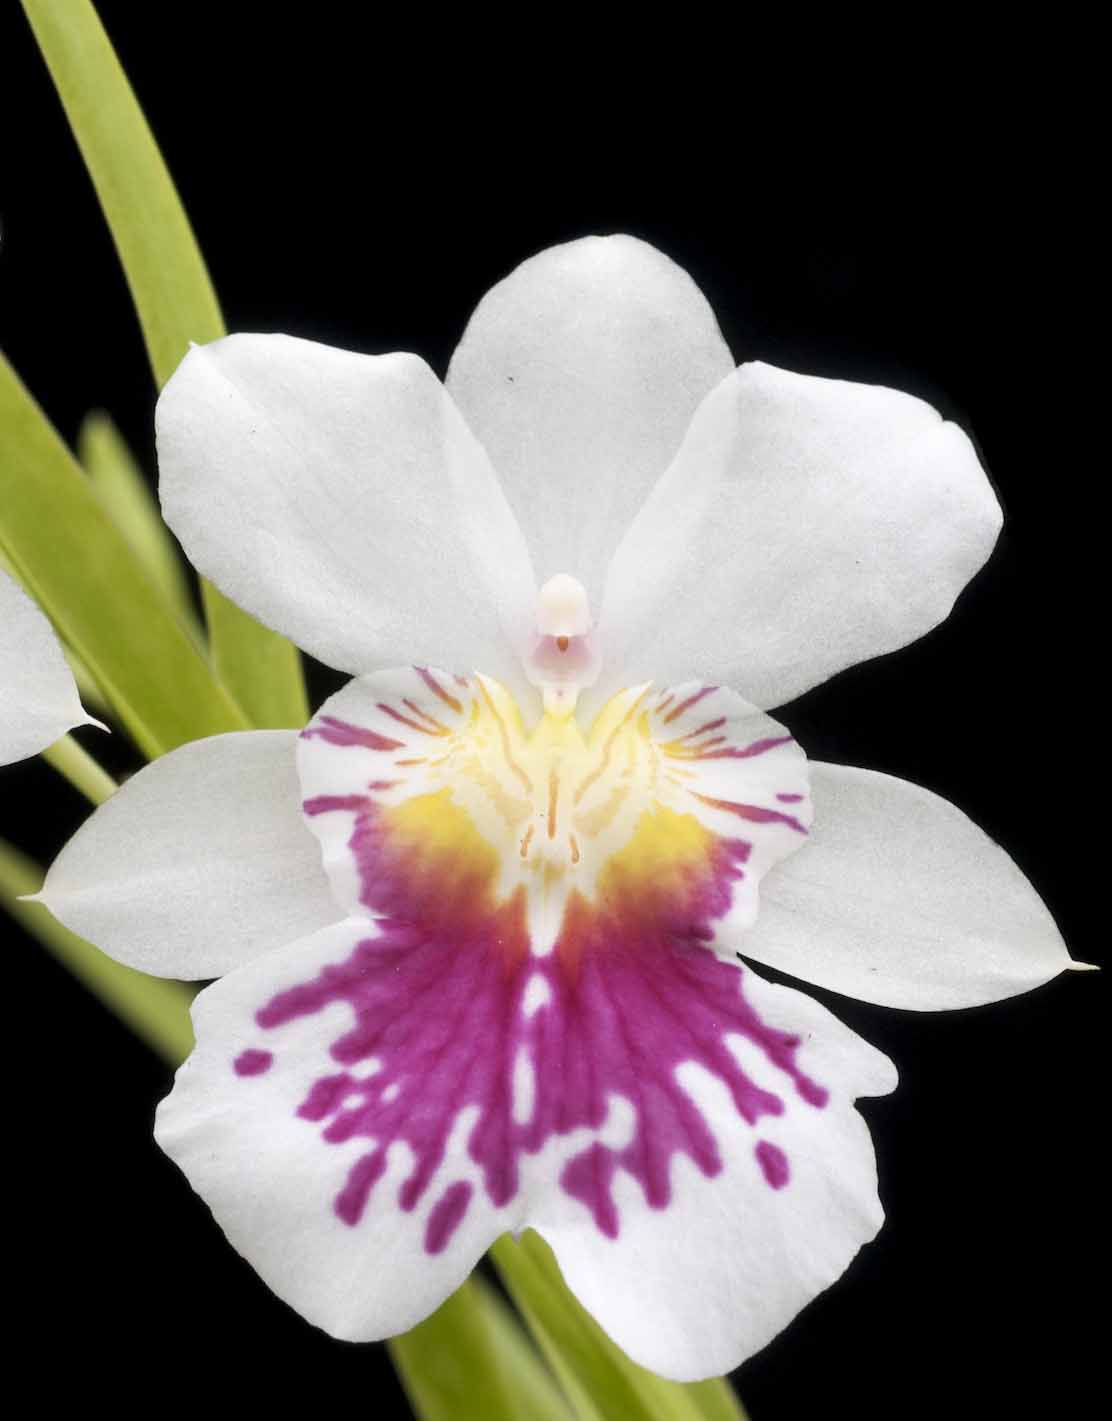 Miltoniopsis phalaenopsis ‘Golden Gate’